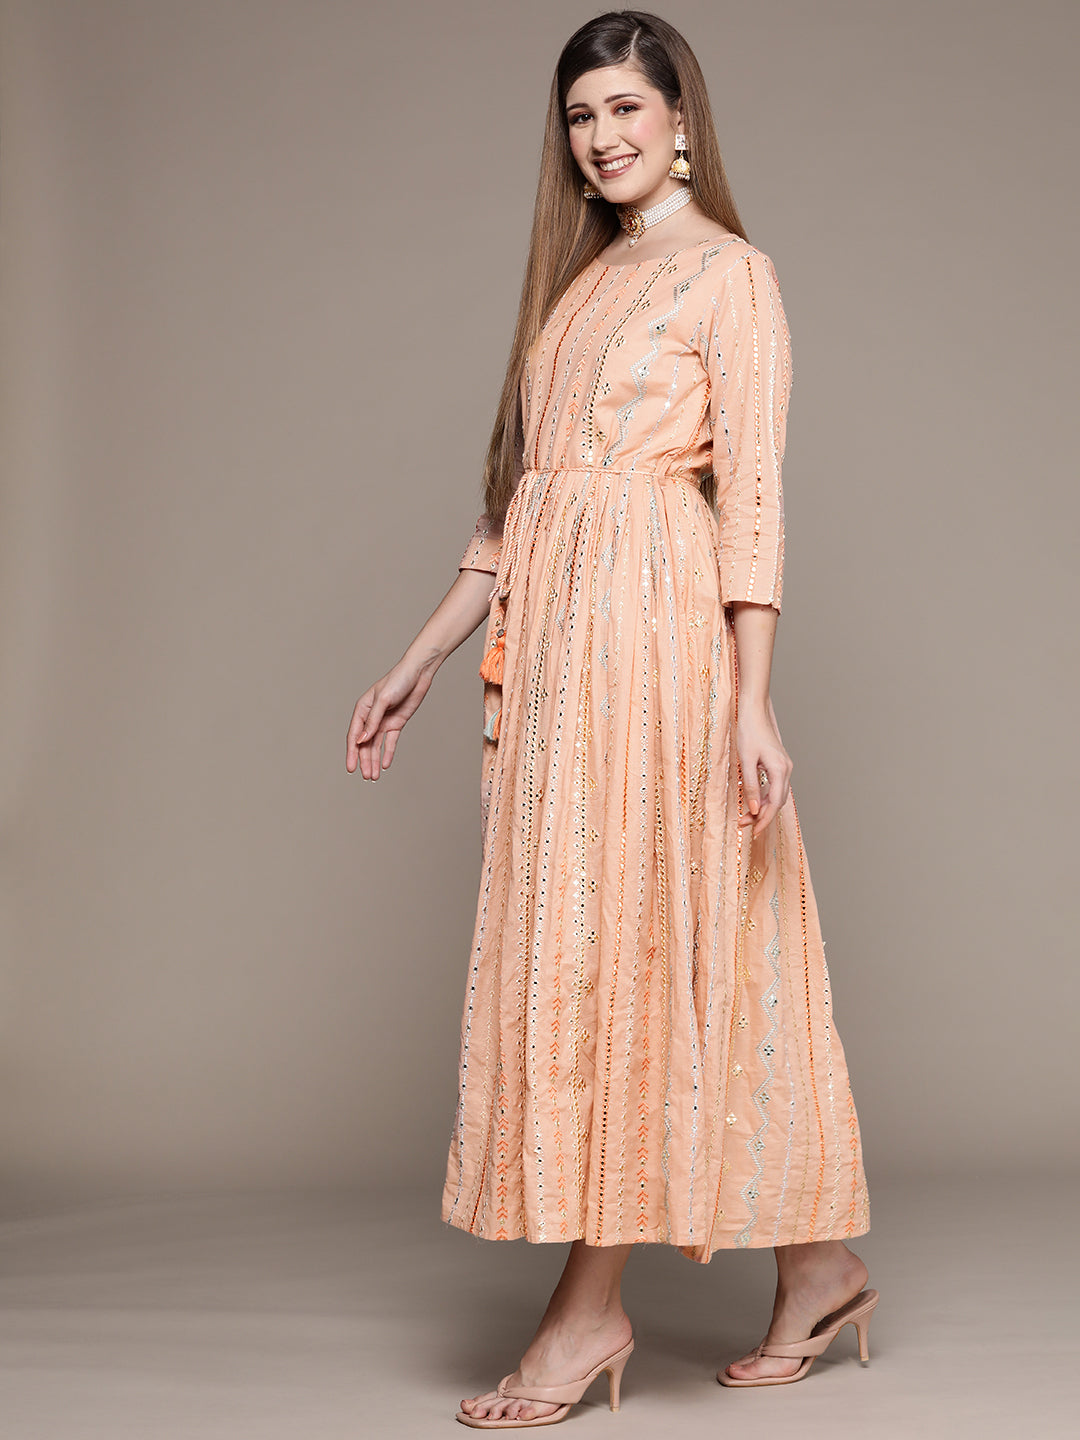 Ishin Women's Peach Embroidered Dress